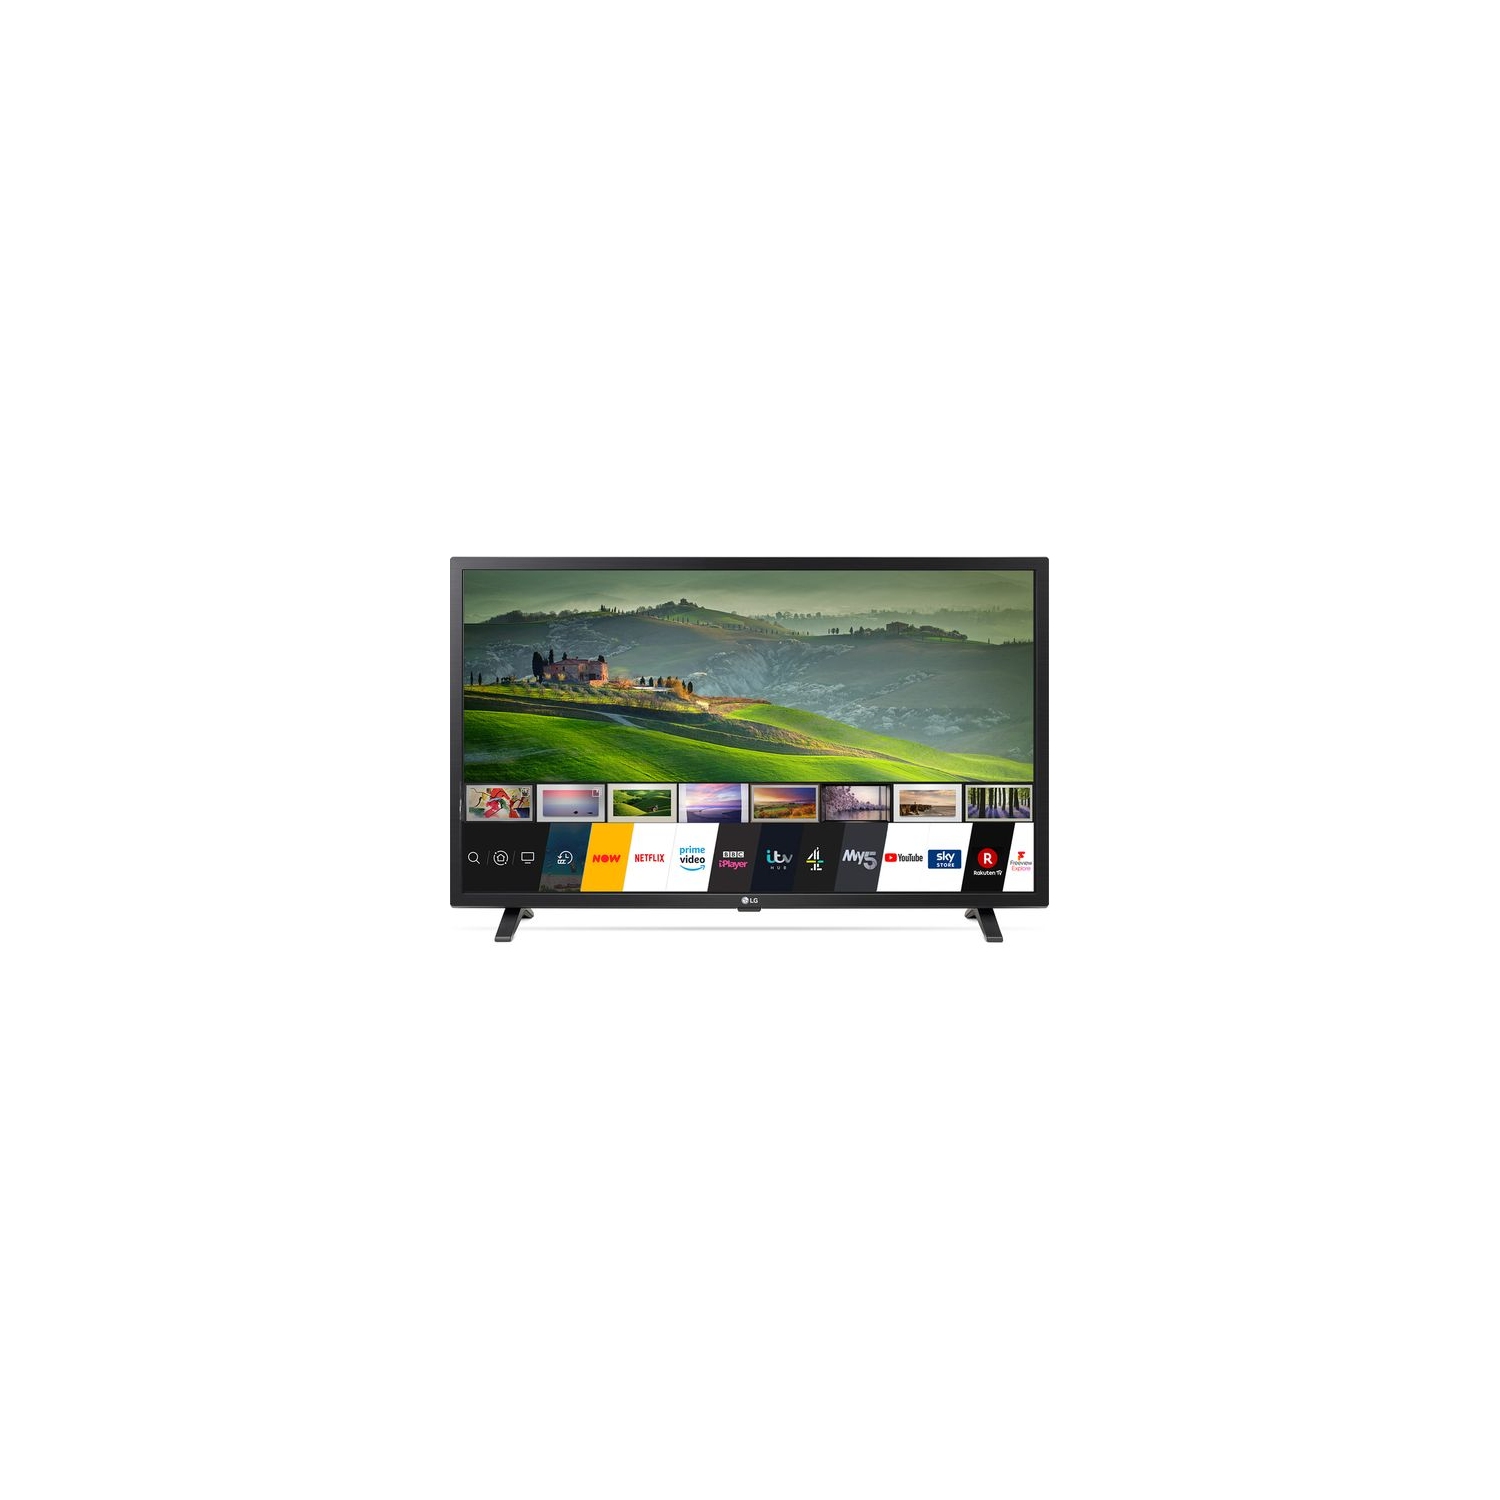 LG 32LQ63006LA 32 TV Full 1080p HD Active HDR LED Smart